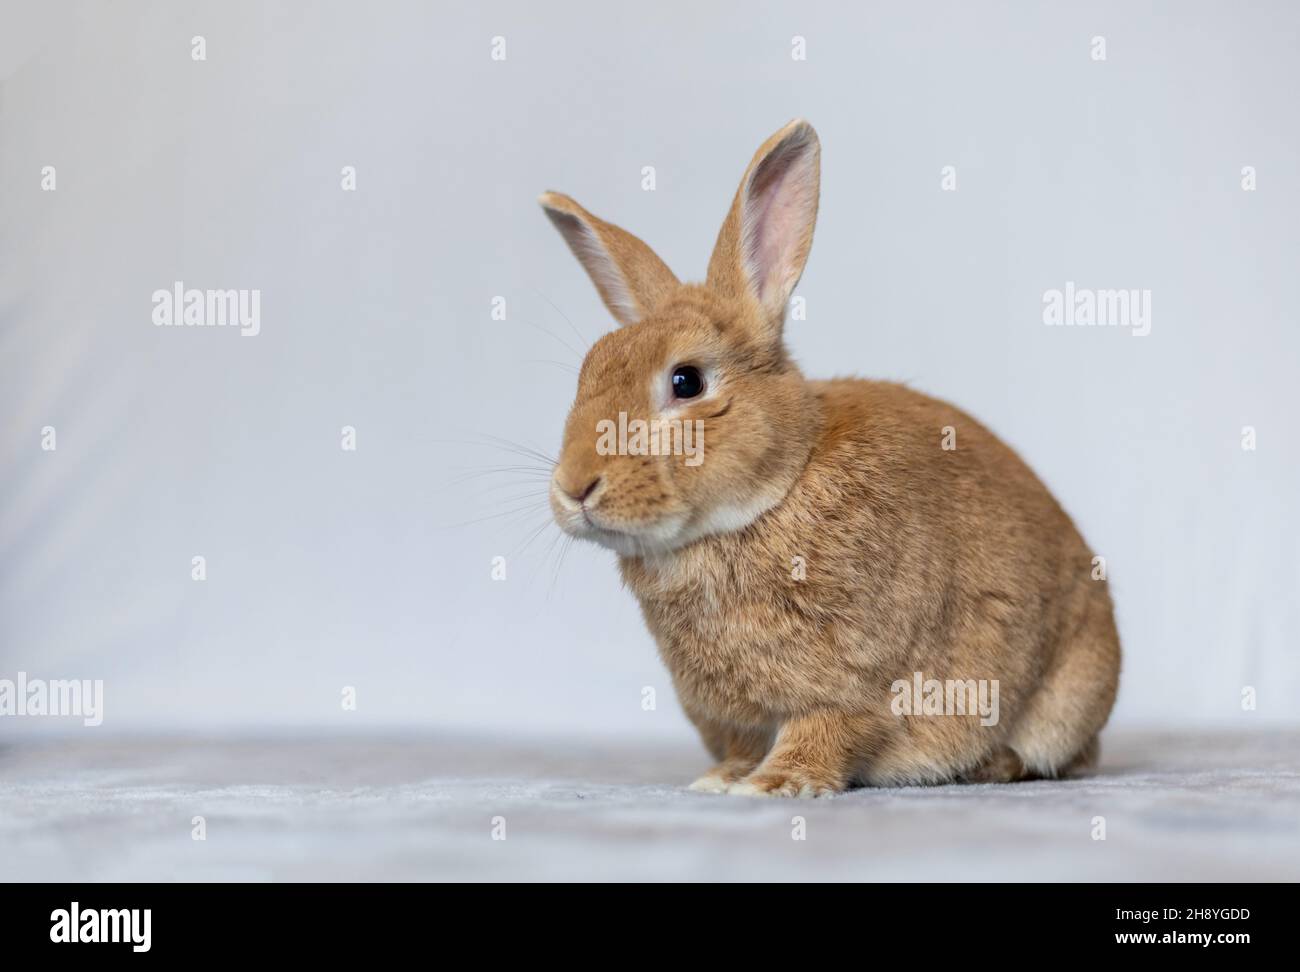 Rufus rabbit sitting up posing white background copy space Stock Photo